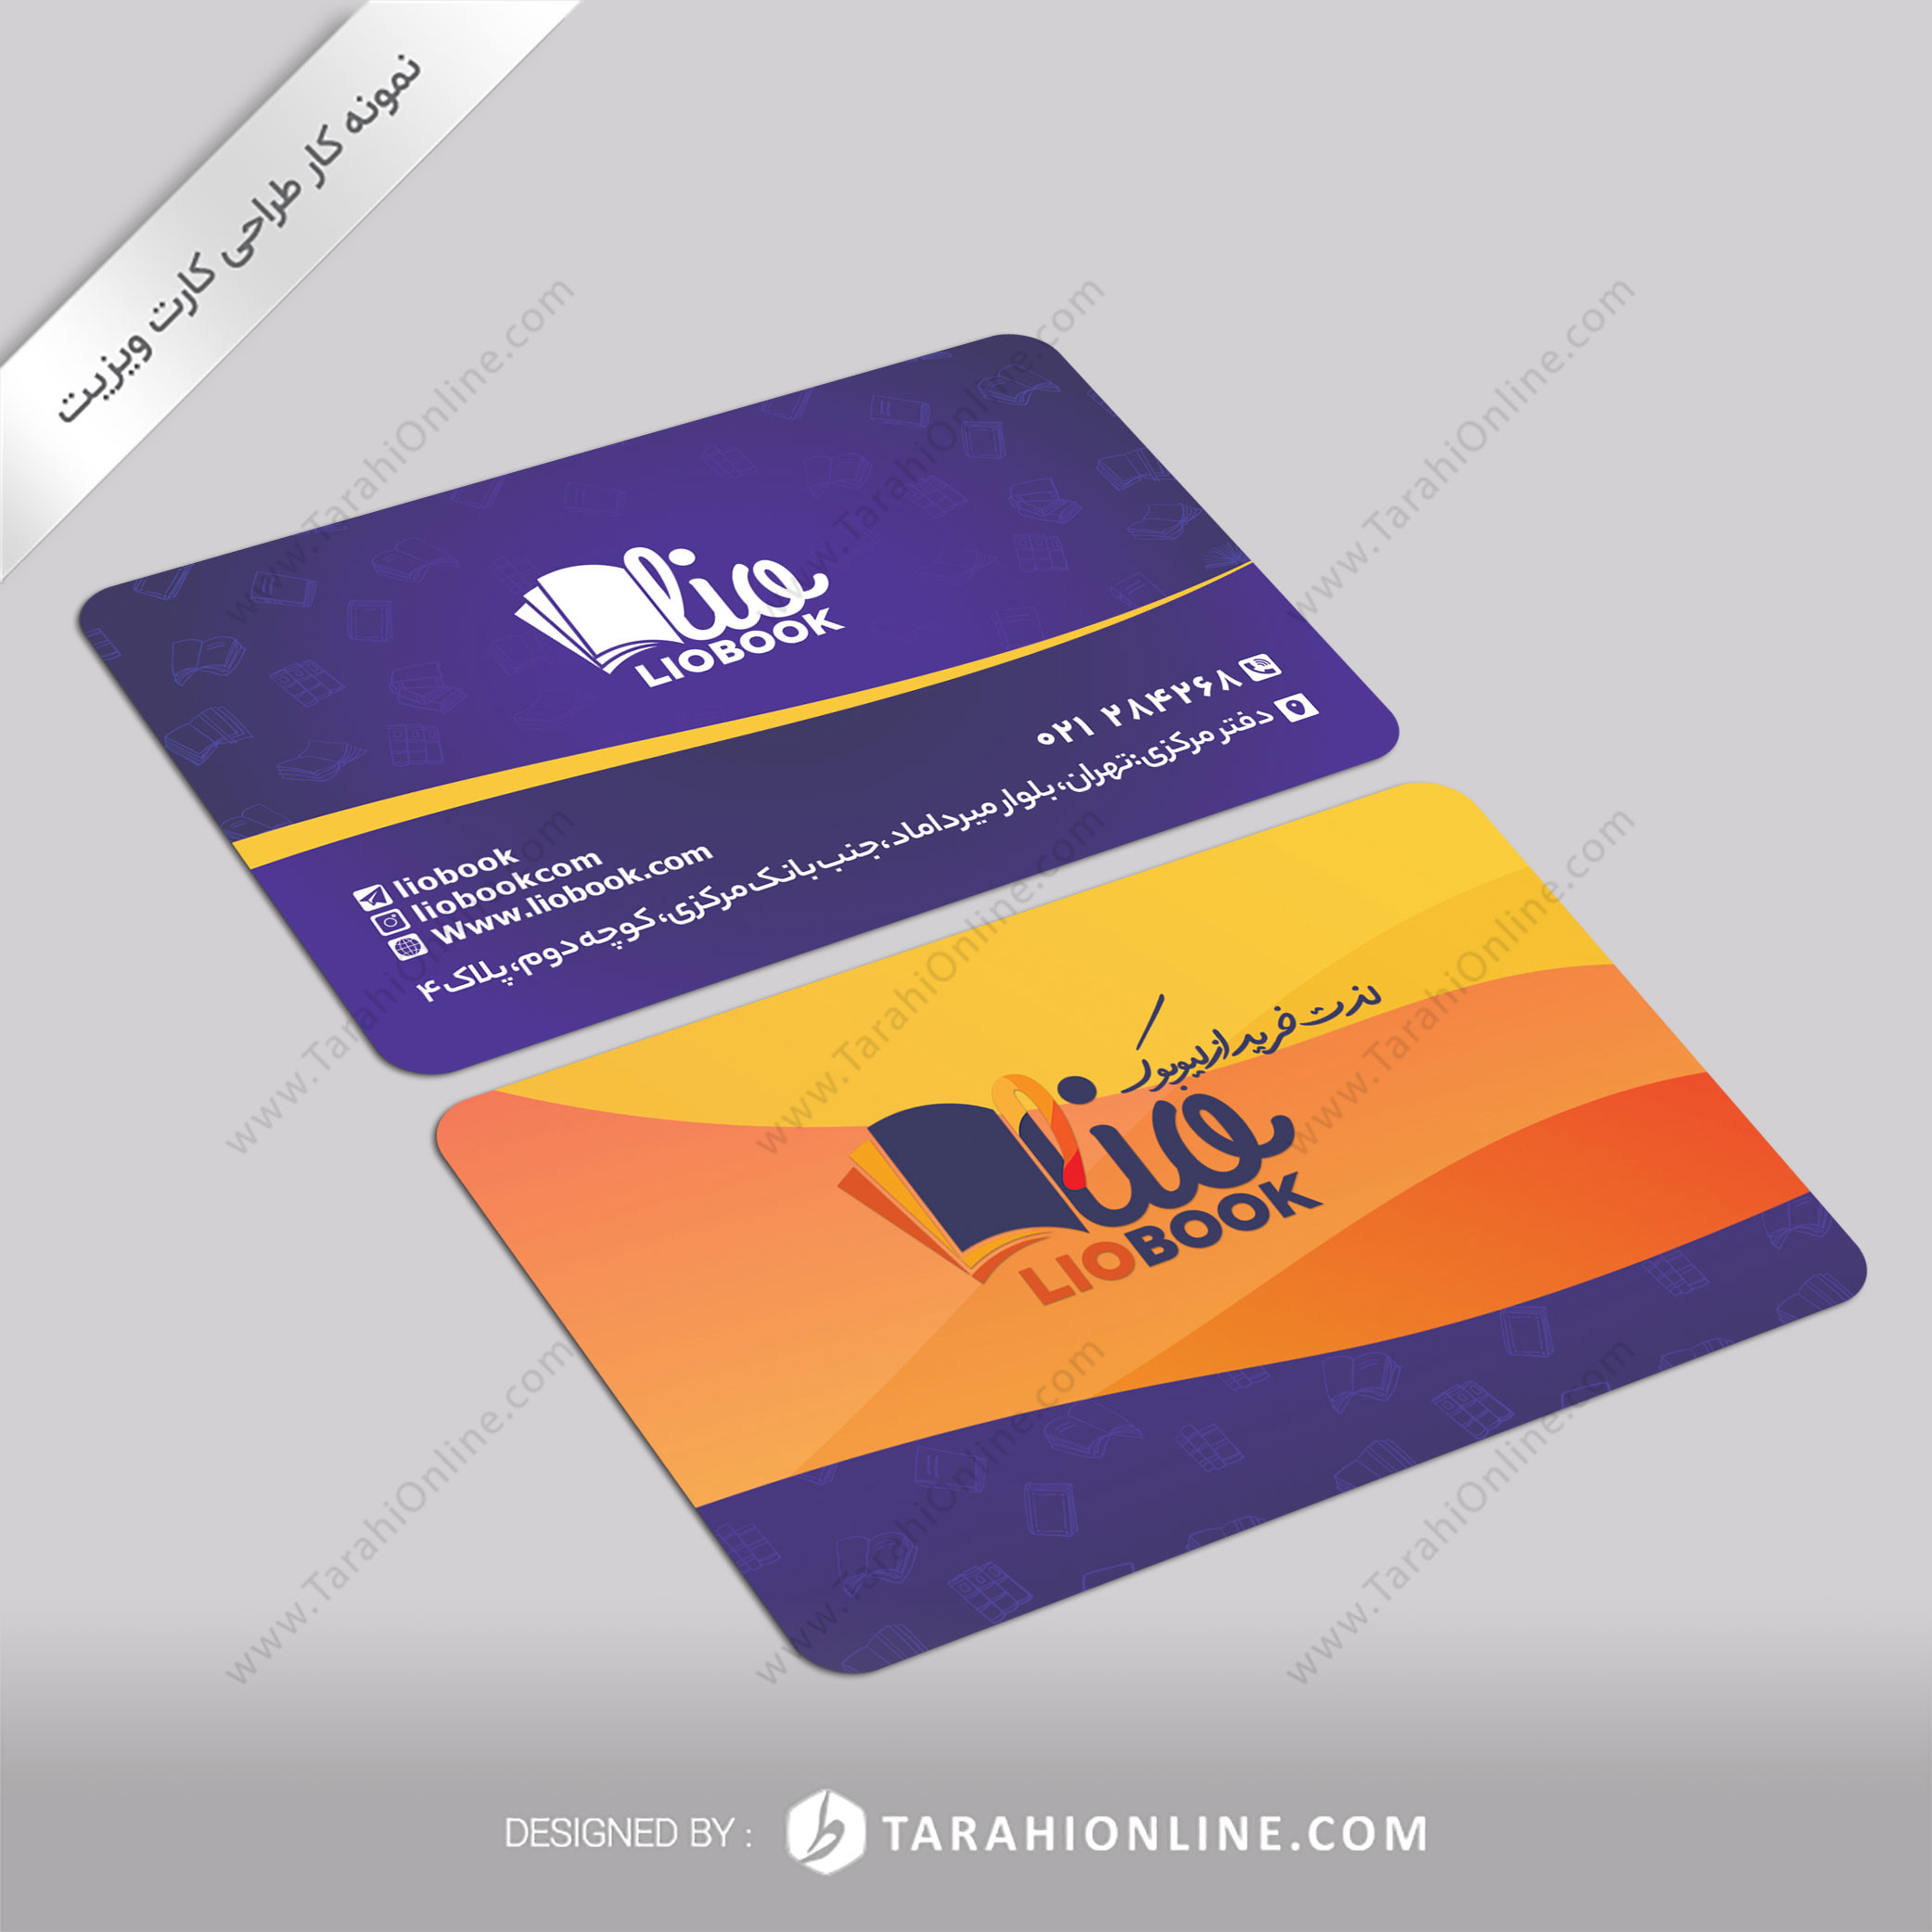 Business Card Design for Mohammadhosein Mozafari Liobook